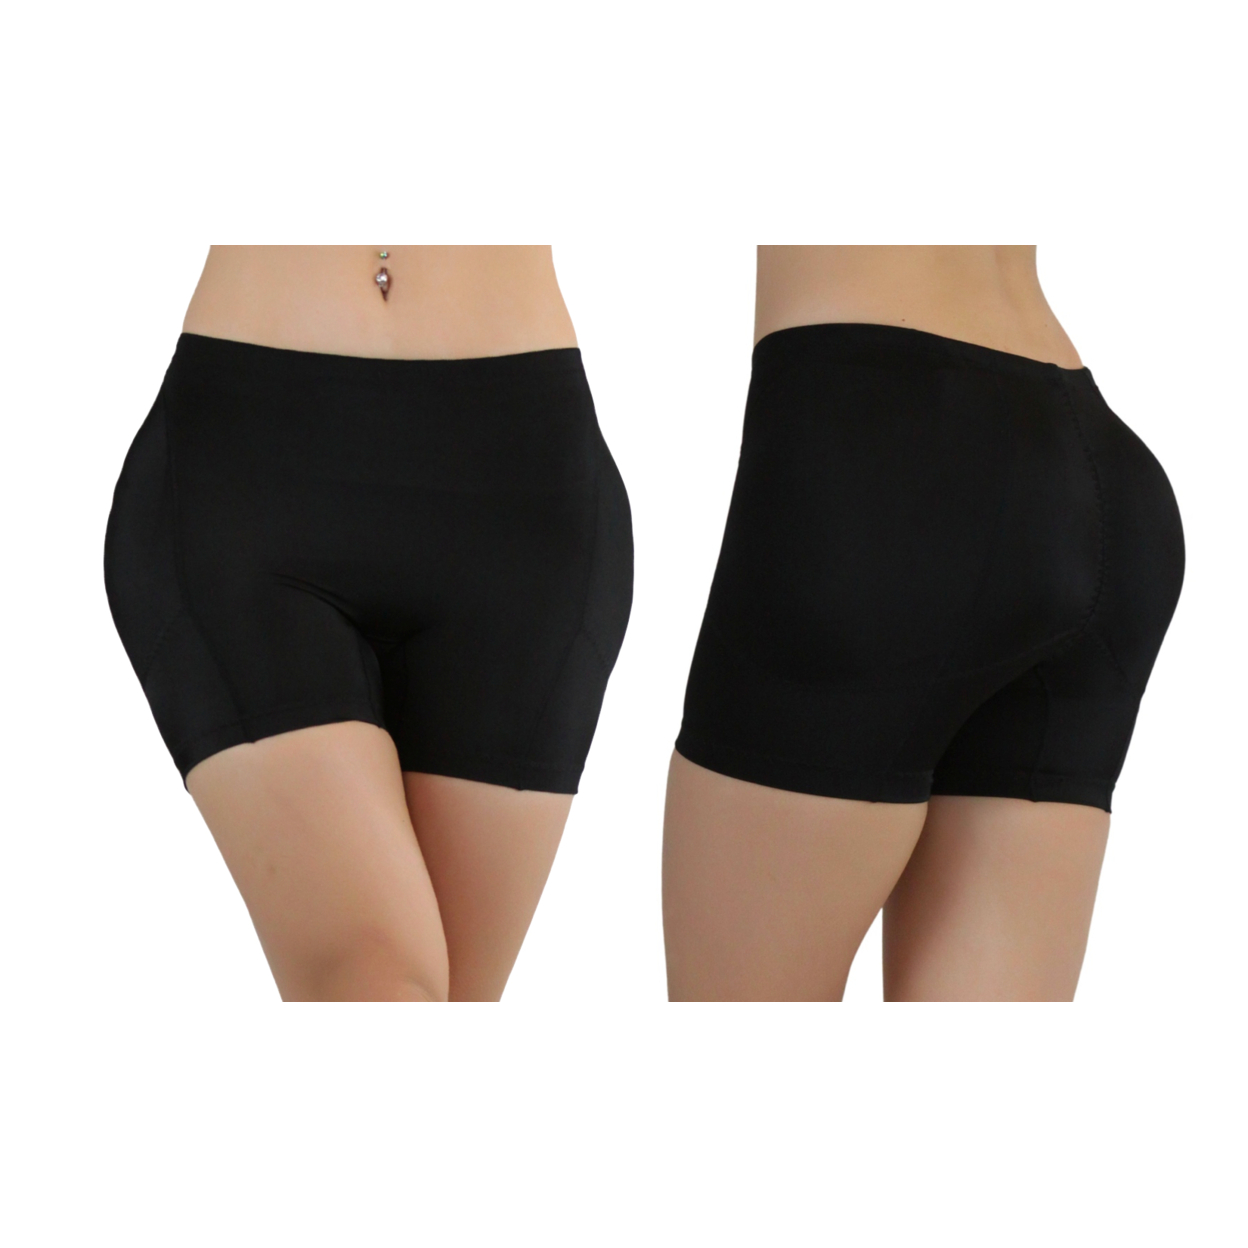 1 Or 2 Pack Of Women Butt And Hip Padded Shaper - Black, Medium